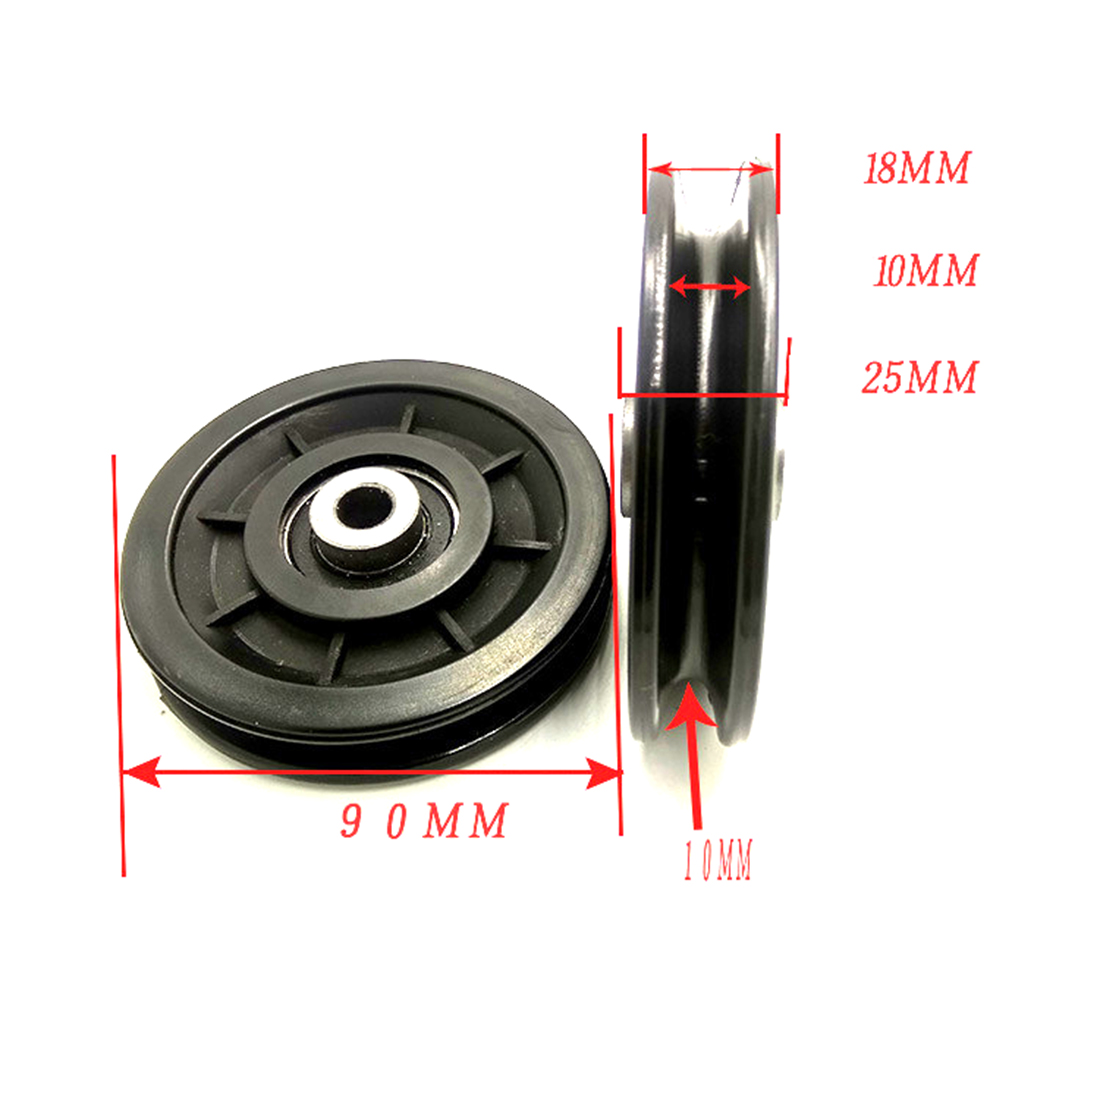 2 stk sort nylon bærende remskivehjul kabel gym fitnessudstyr 90mm/3.5 "slidstyrke nylon kabelhjul